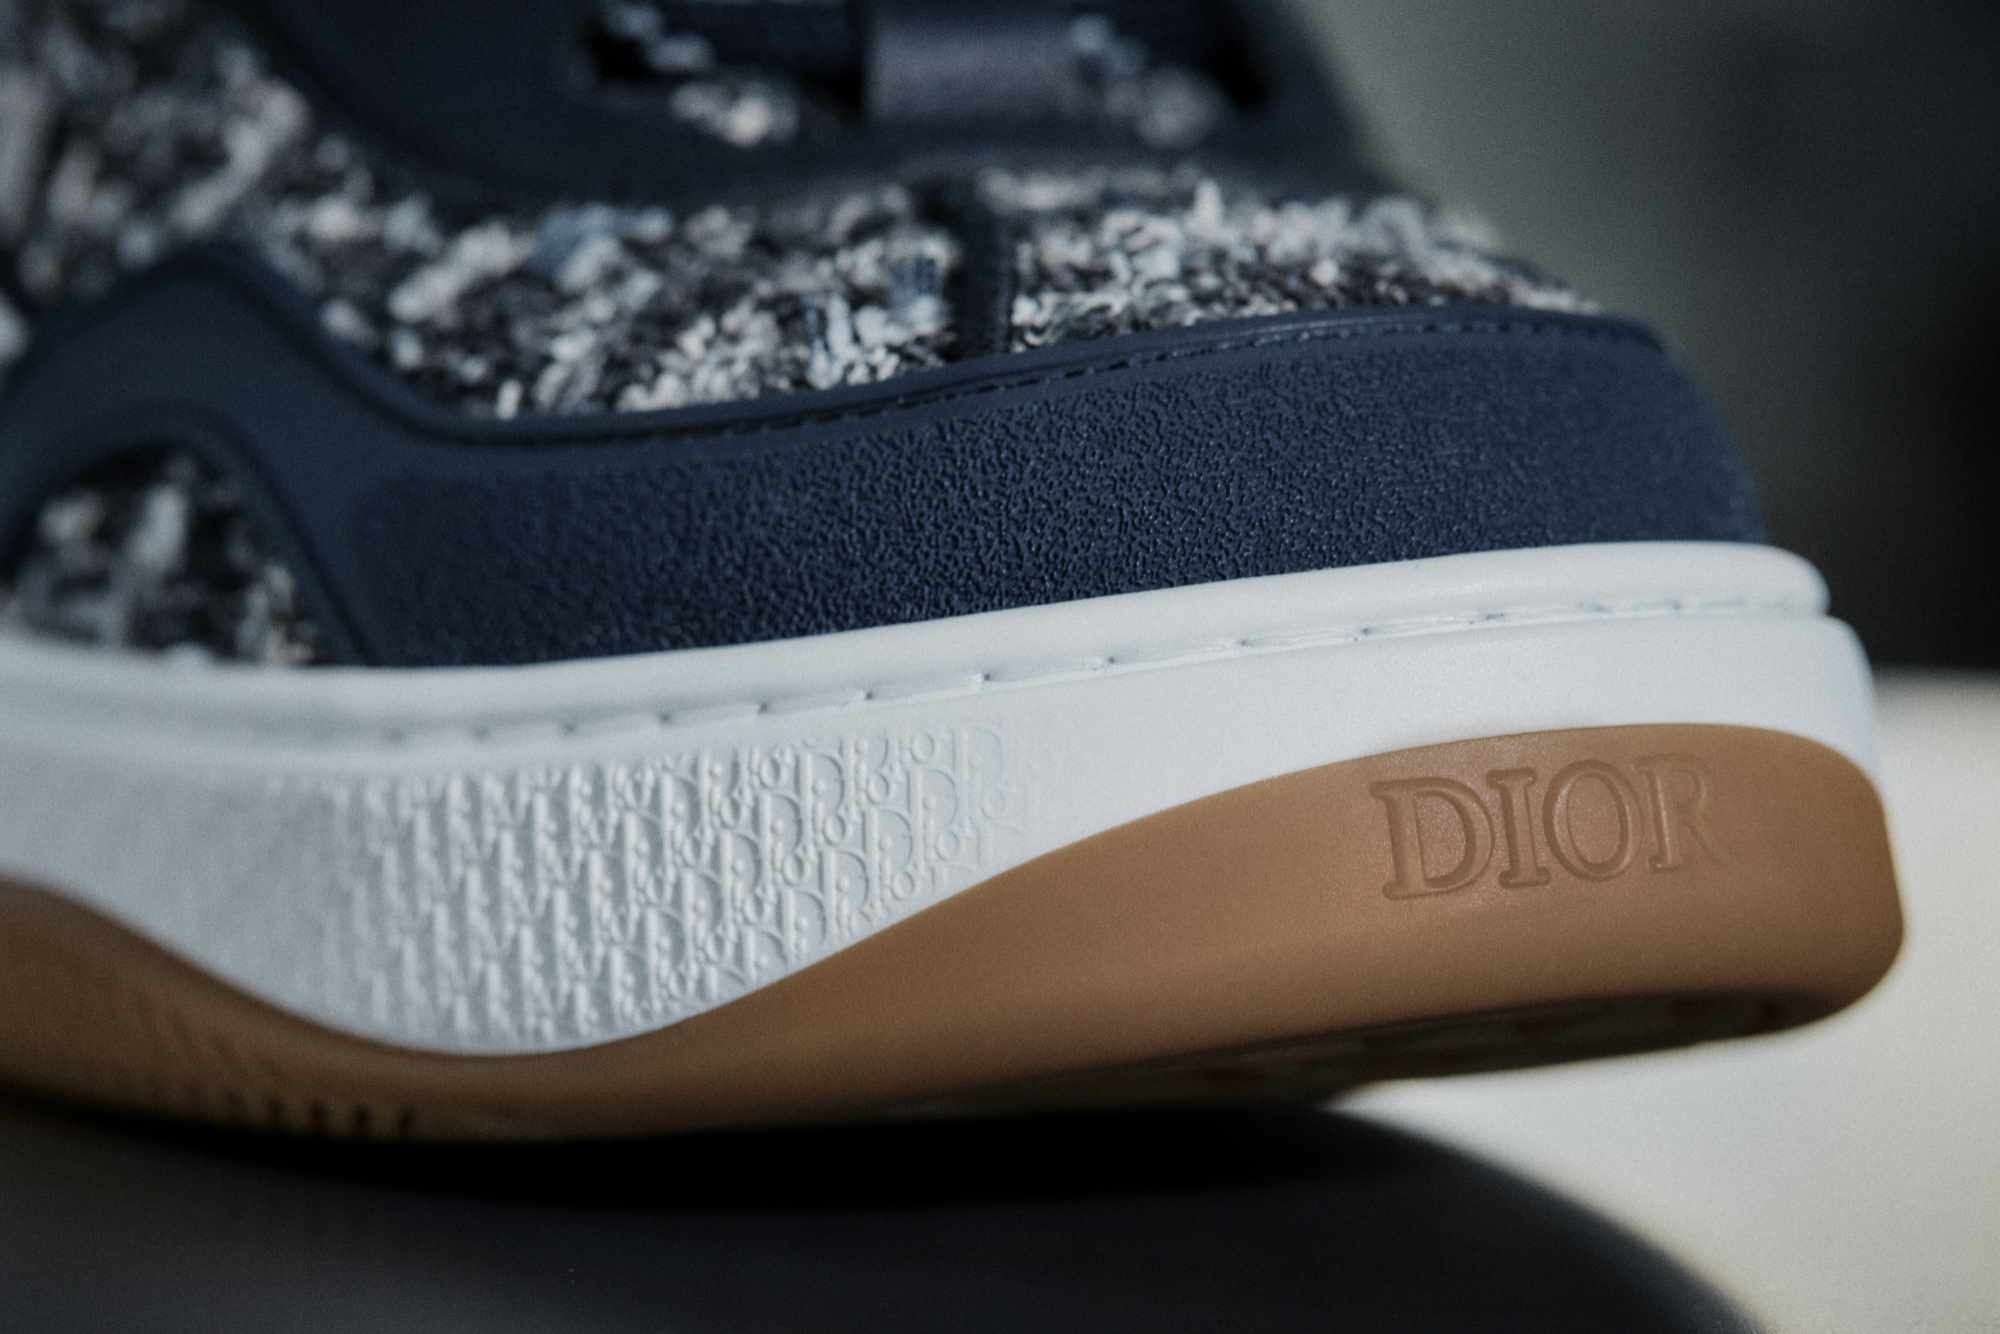 Dior's B9s menswear sneaker